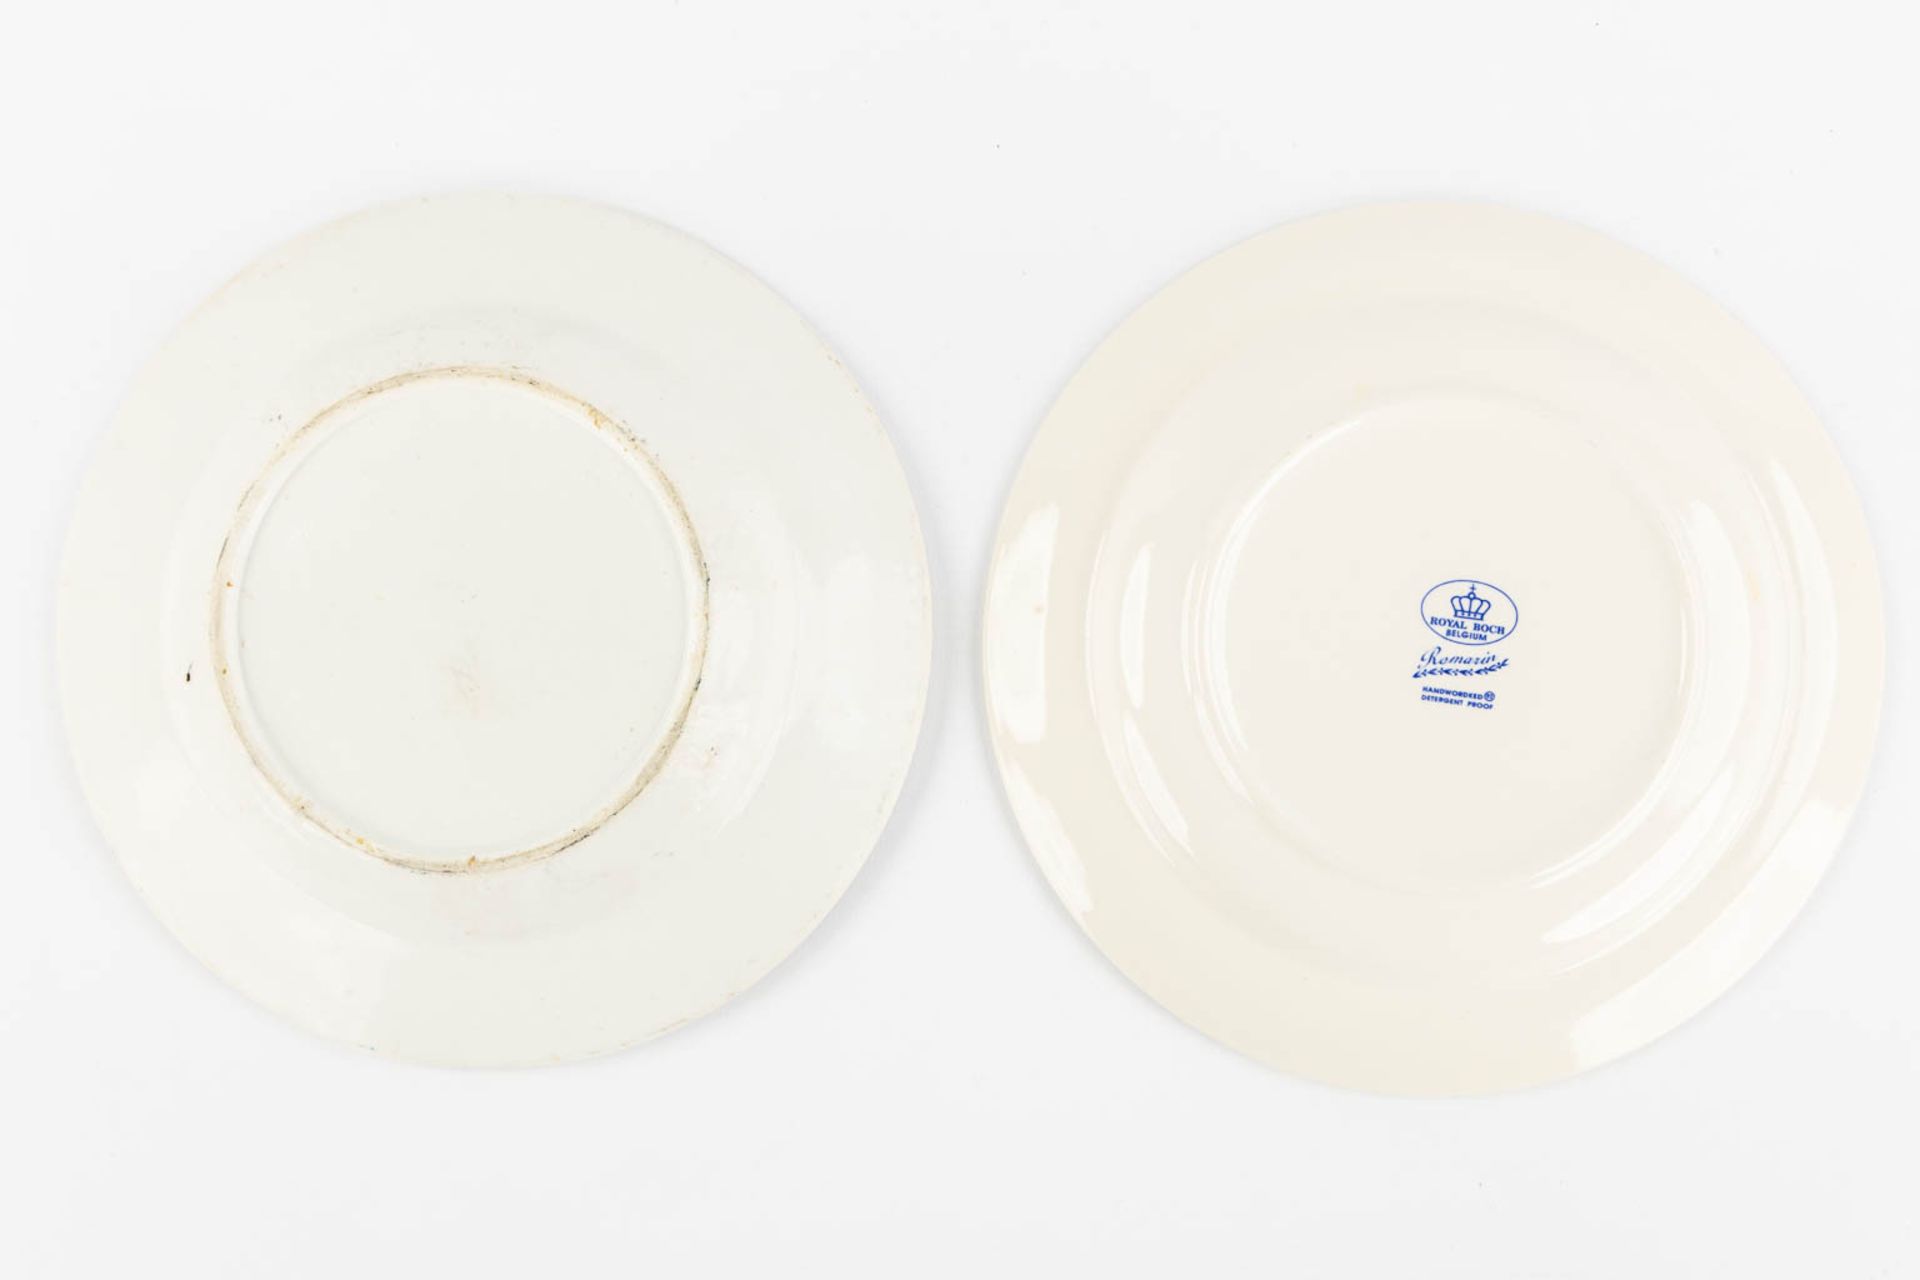 Vieux Tournai, 'Acorn' and Royal Boch plates. 19th/20th C. (D:24 cm) - Image 6 of 13